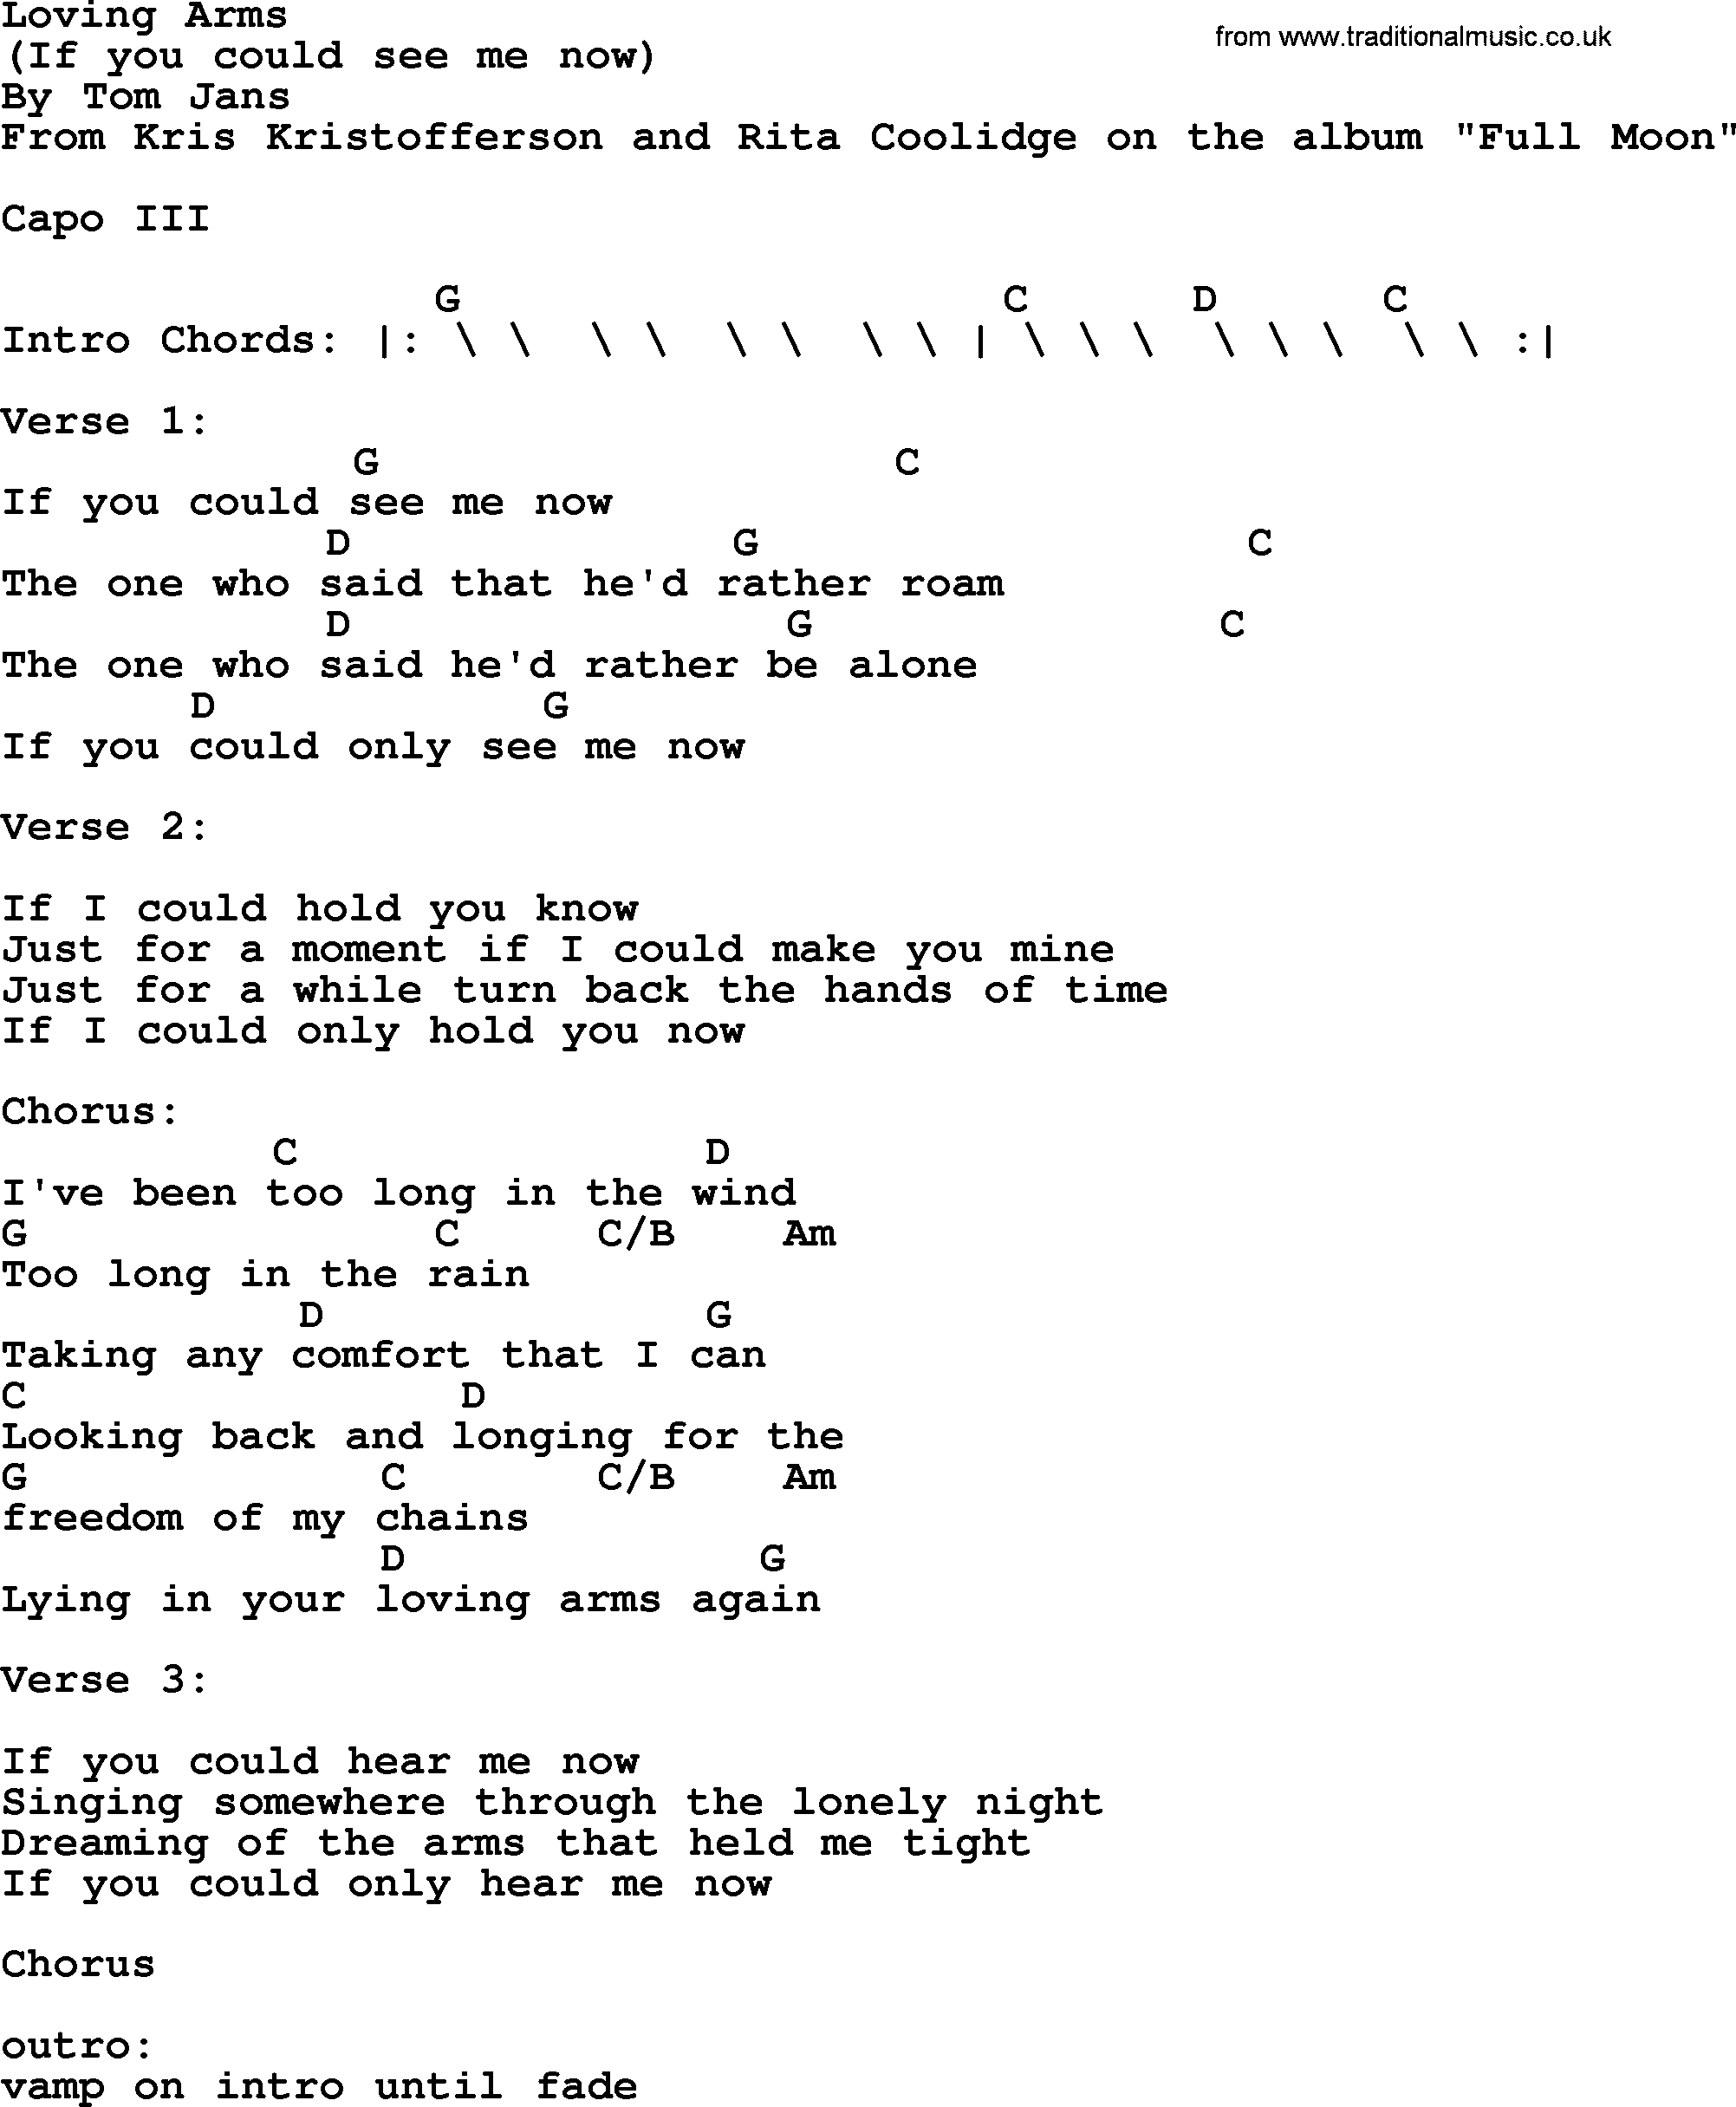 Kris Kristofferson song: Loving Arms lyrics and chords